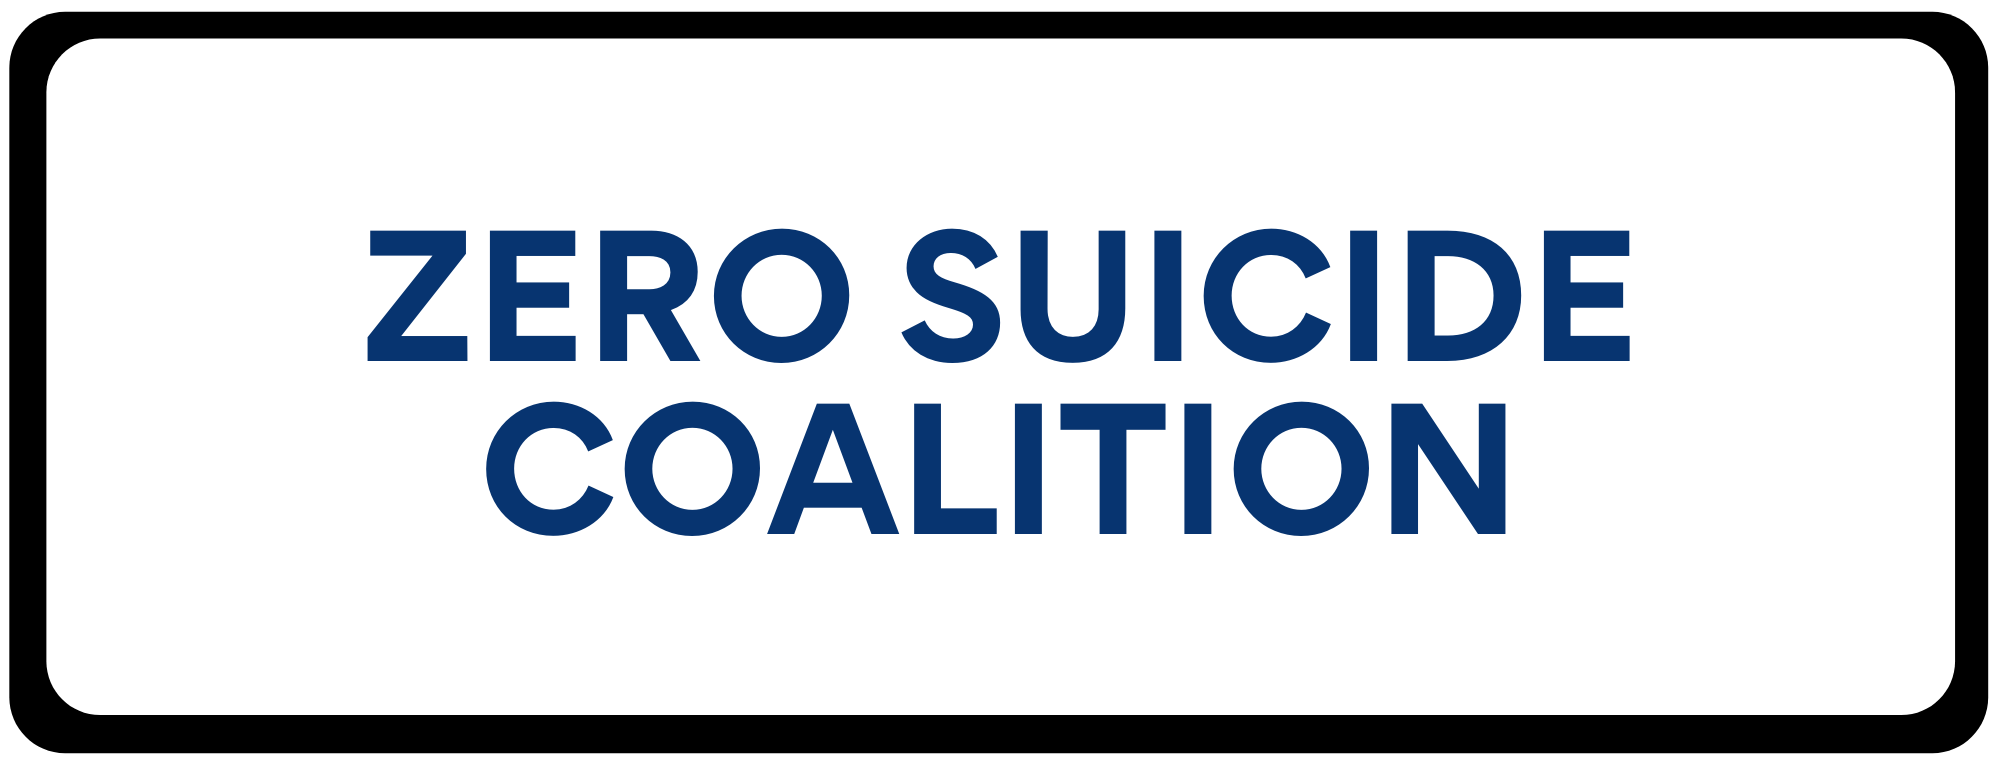 Zero Suicide Coalition